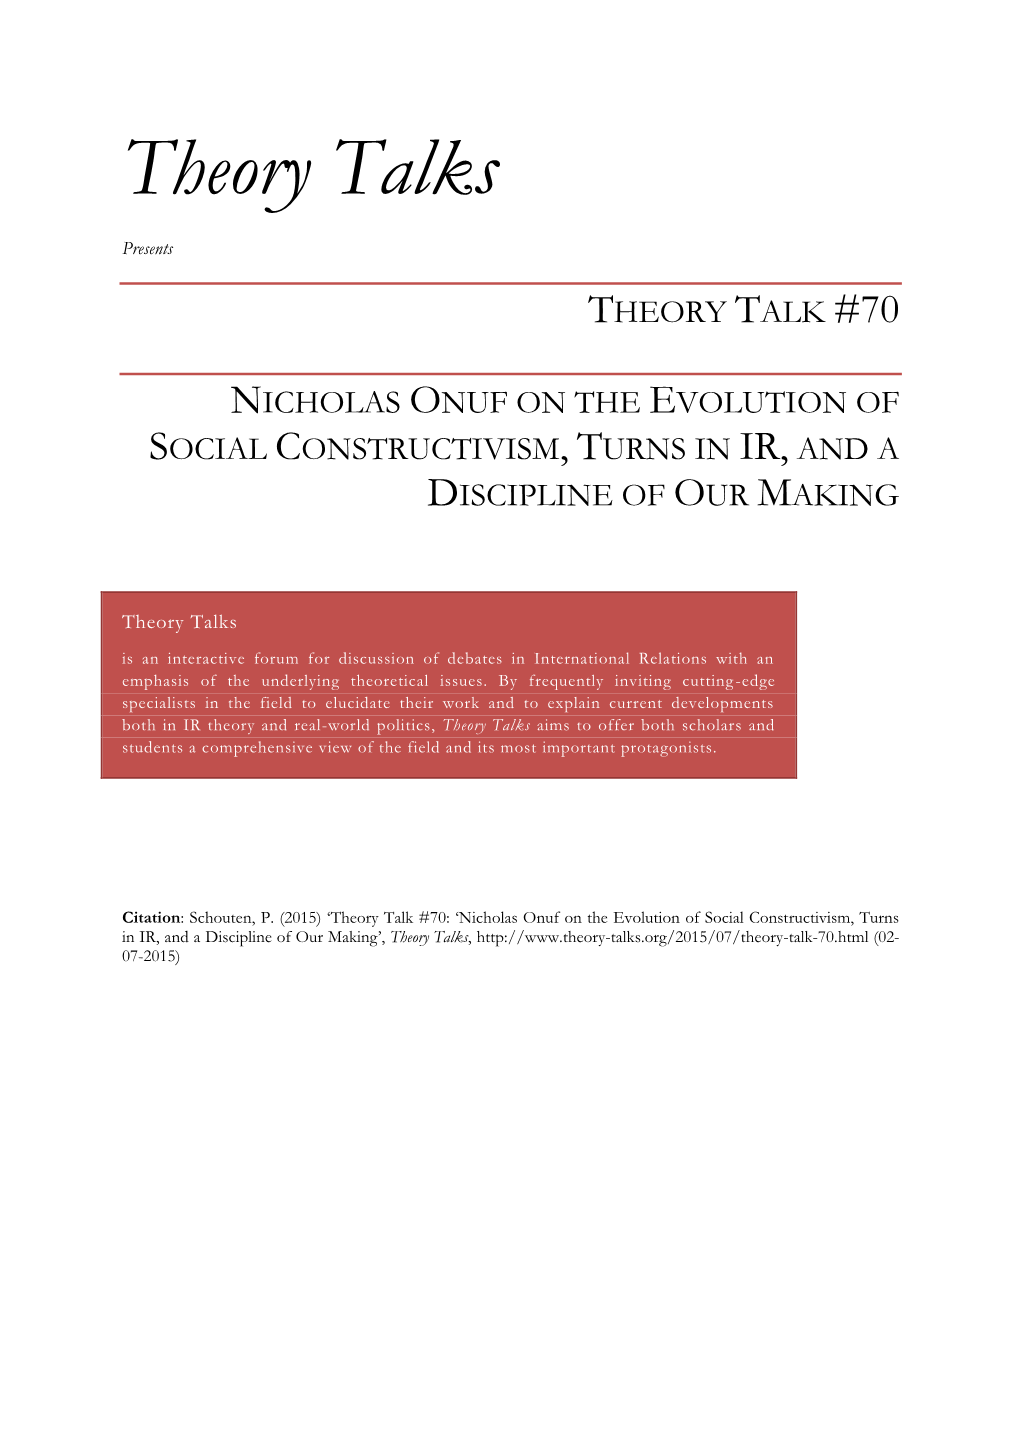 Theory Talk #70 Nicholas Onuf on the Evolution of Social Constructivism